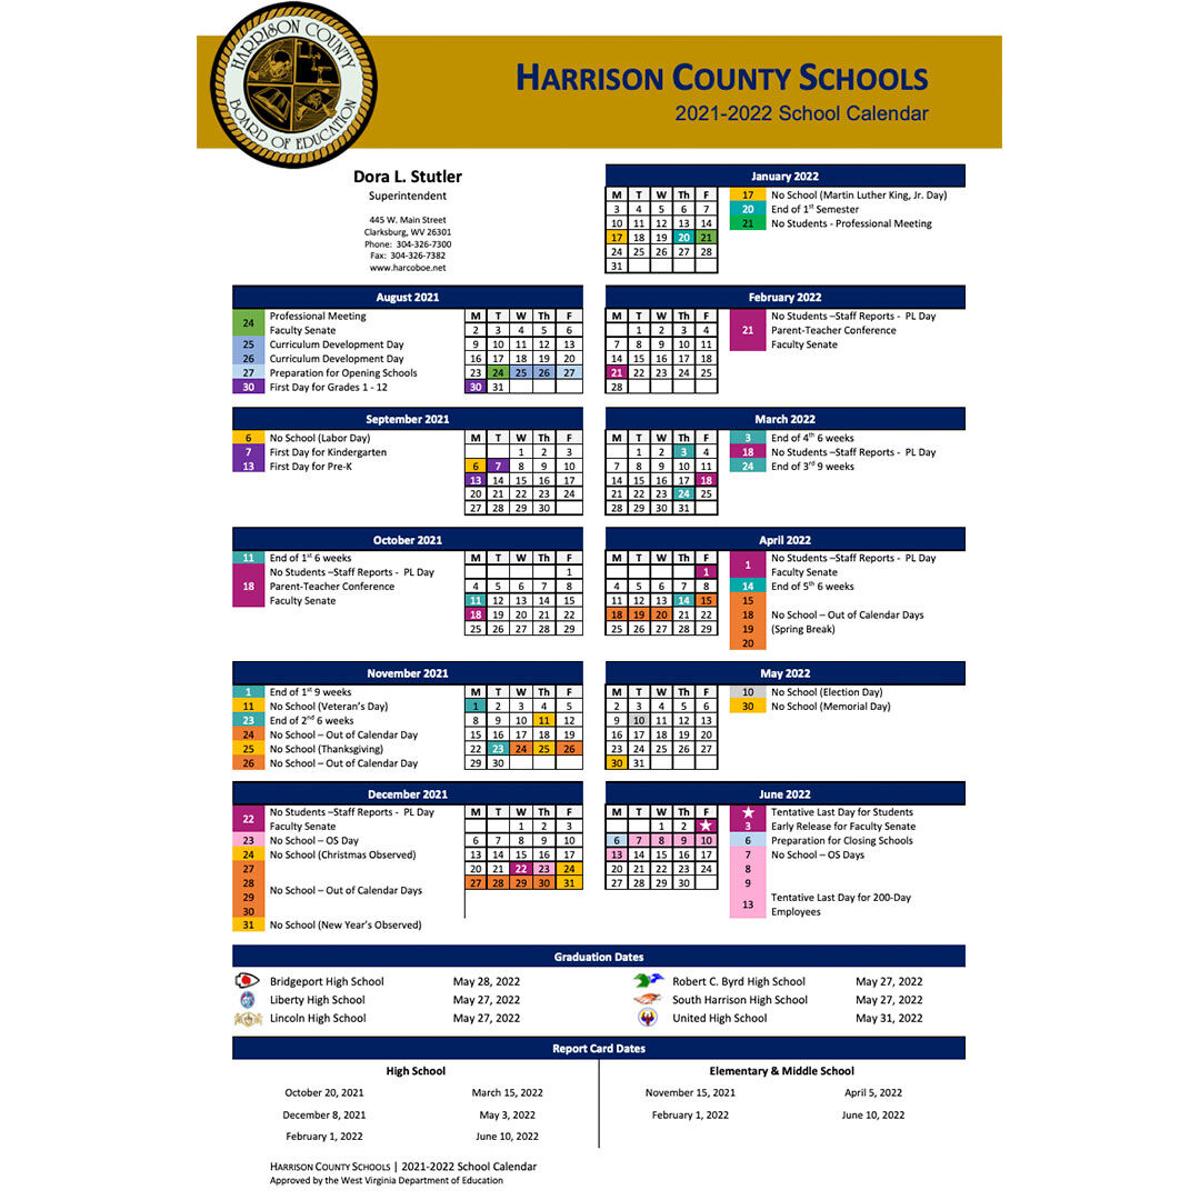 Michigan State Academic Calendar 2022 2023 Harrison County Schools Academic Calendar 2021-22 | Wv News | Wvnews.com